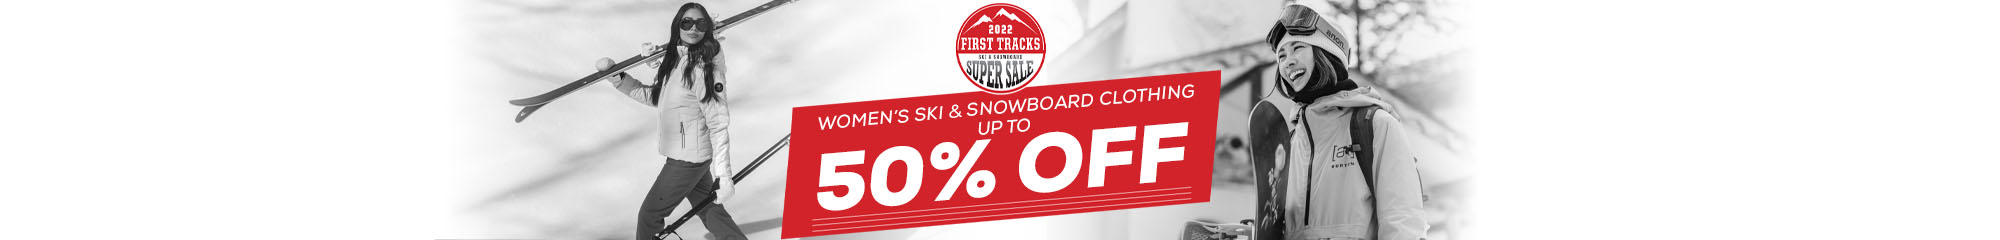 2022 First Tracks Ski & Snowboard Super Sale. Women's Ski & Snowboard Clothing up to 50% Off. 